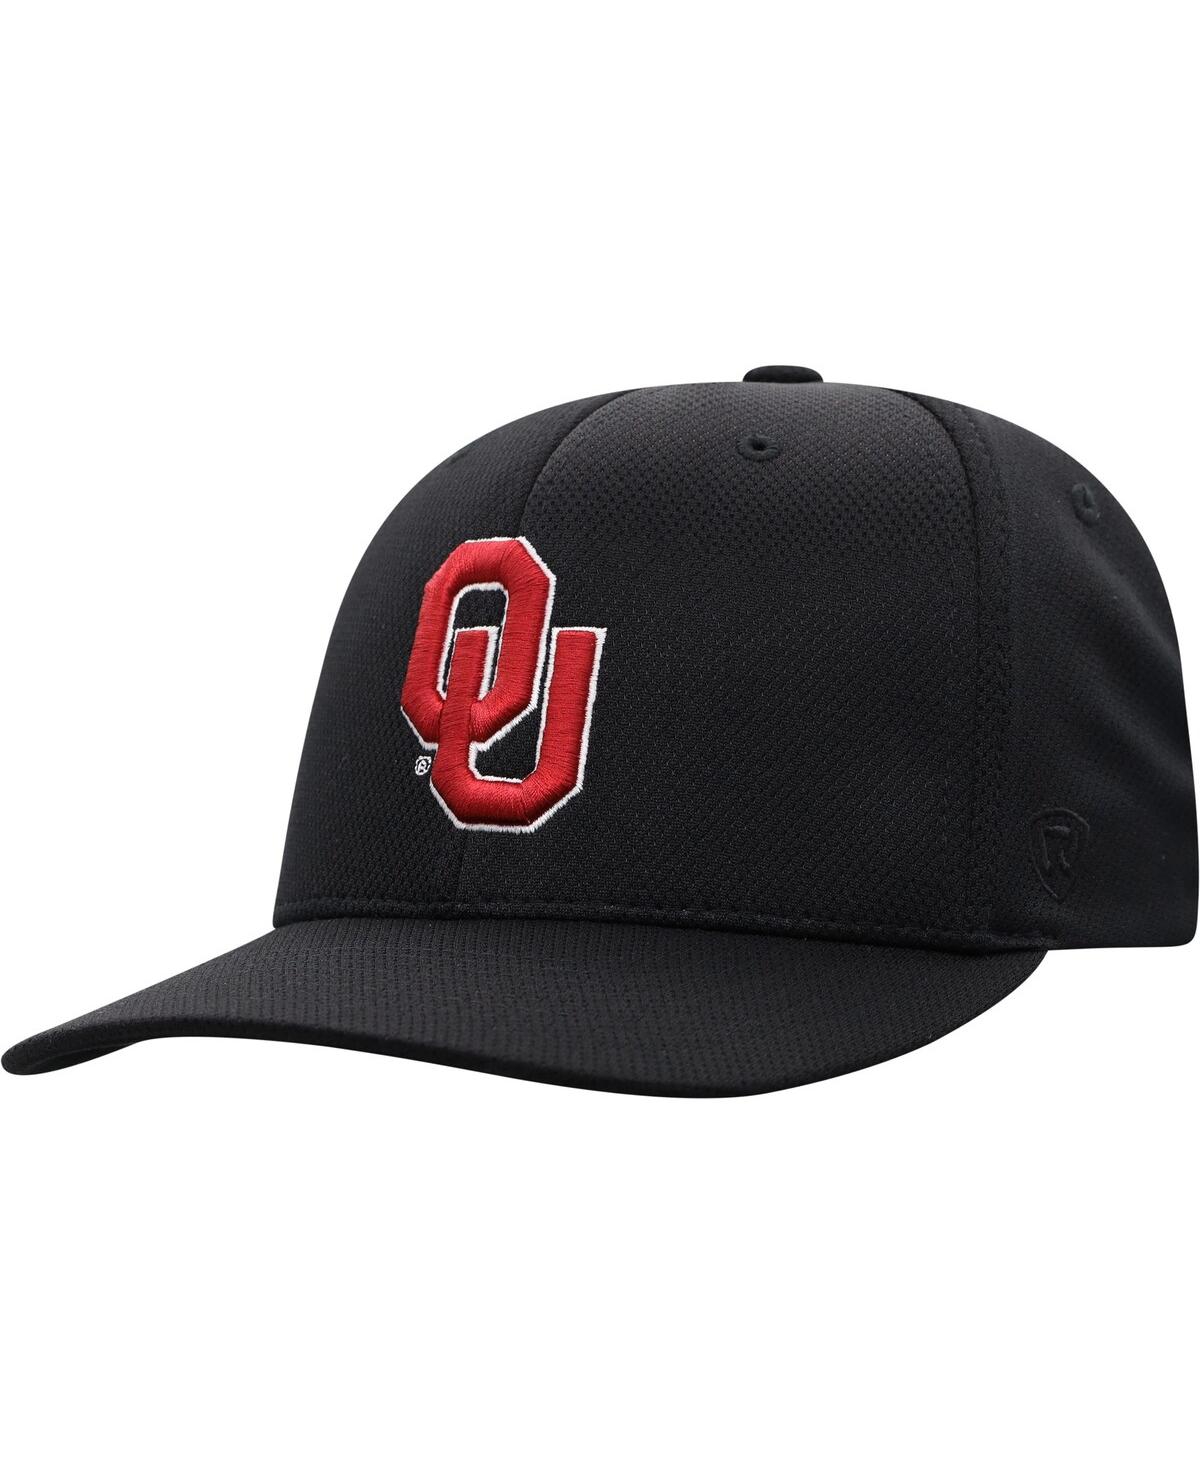 Men's Top Of The World Black Oklahoma Sooners Reflex Logo Flex Hat - Black